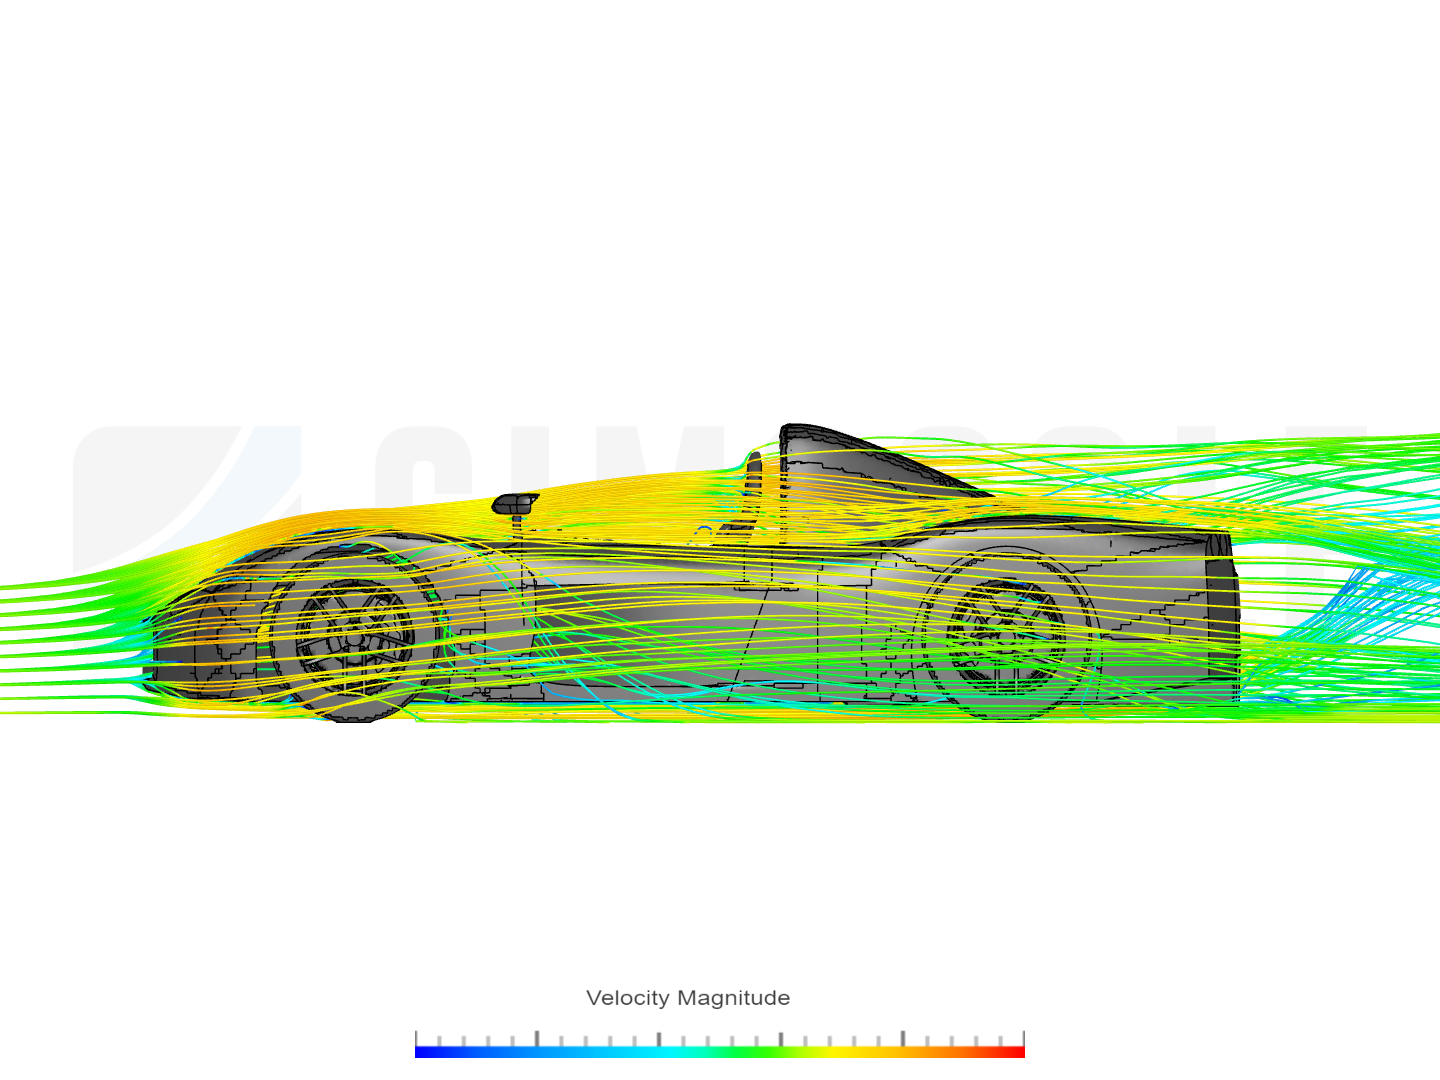 test-project car image